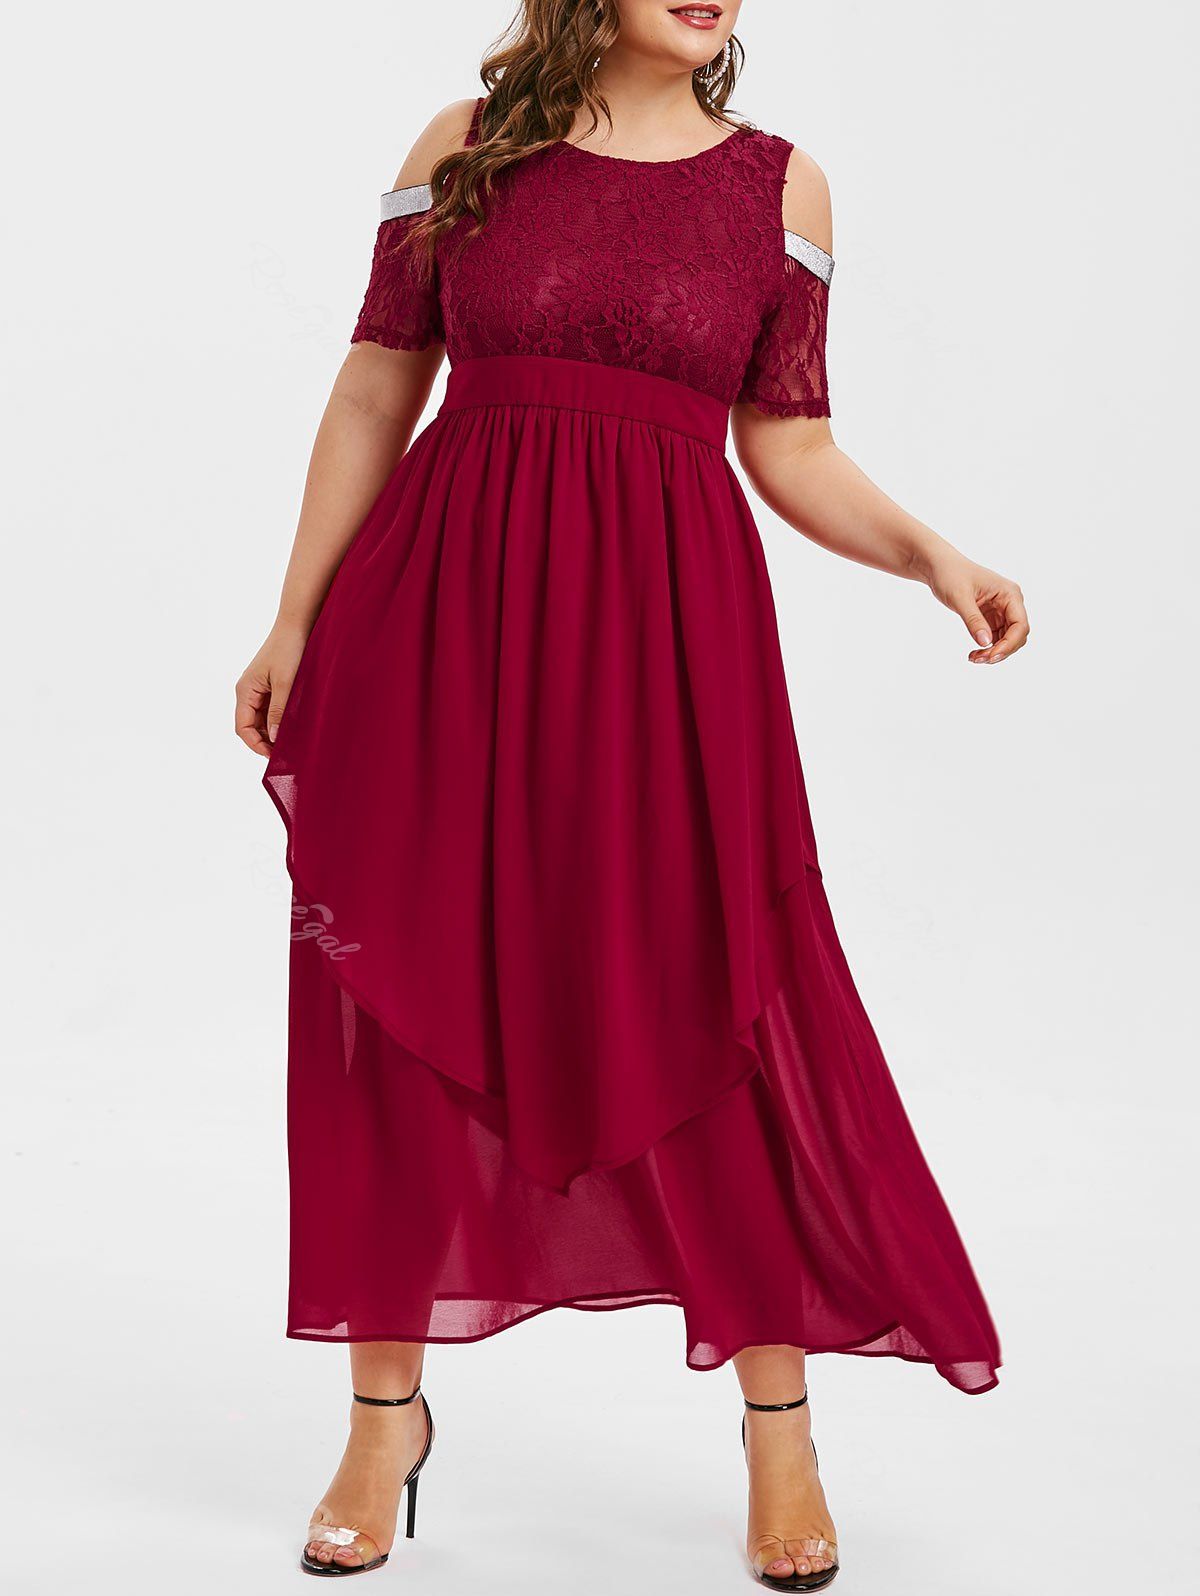 [37% OFF] Plus Size Cold Shoulder Lace Panel Prom Dress | Rosegal